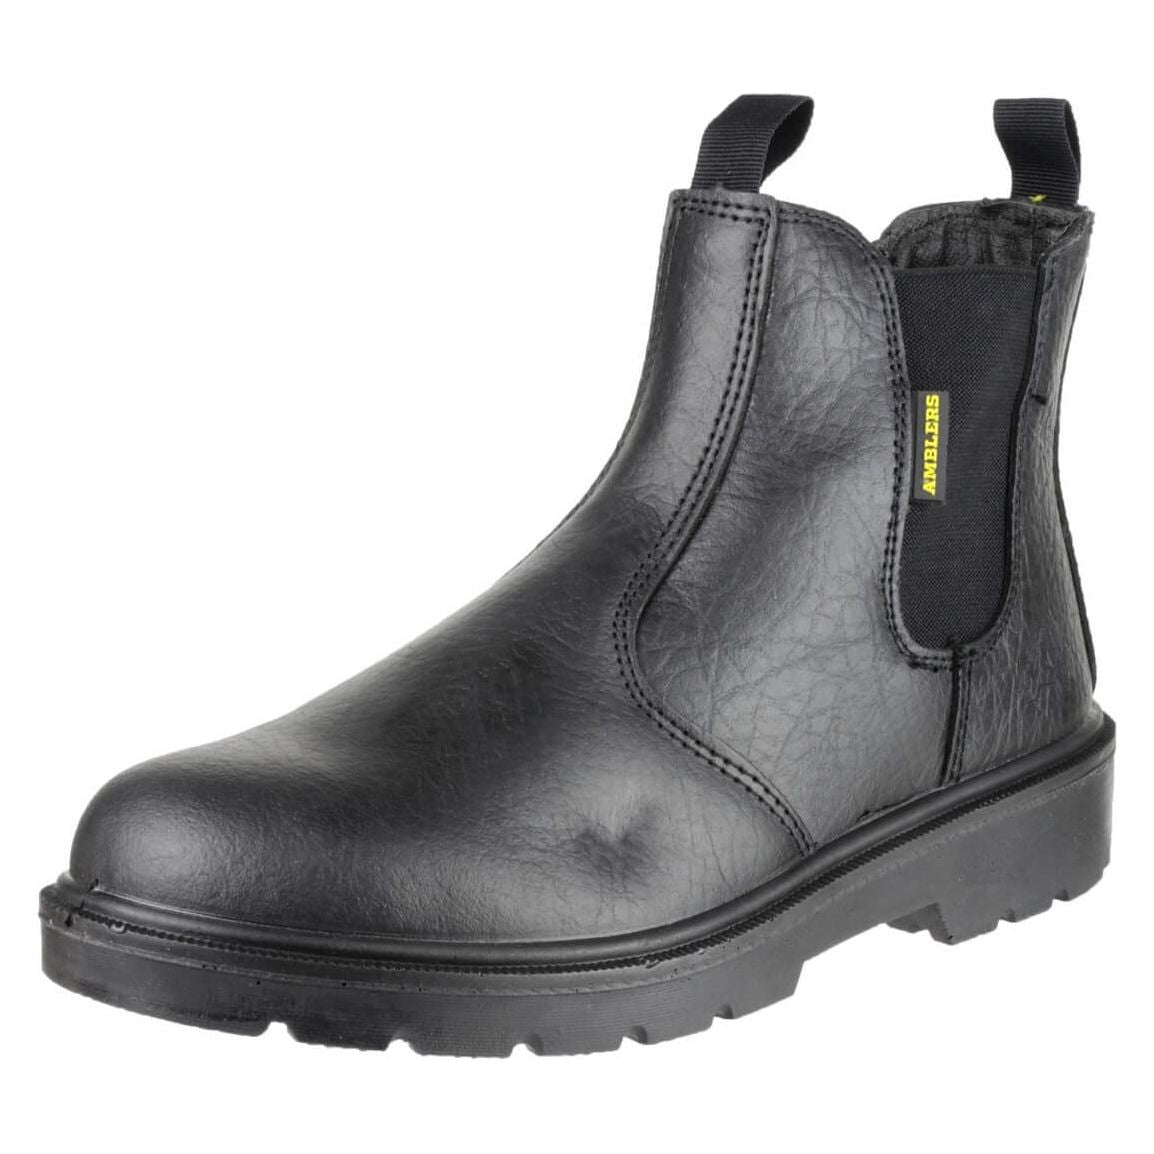 Amblers Fs116 Safety Dealer Boots Womens - workweargurus.com